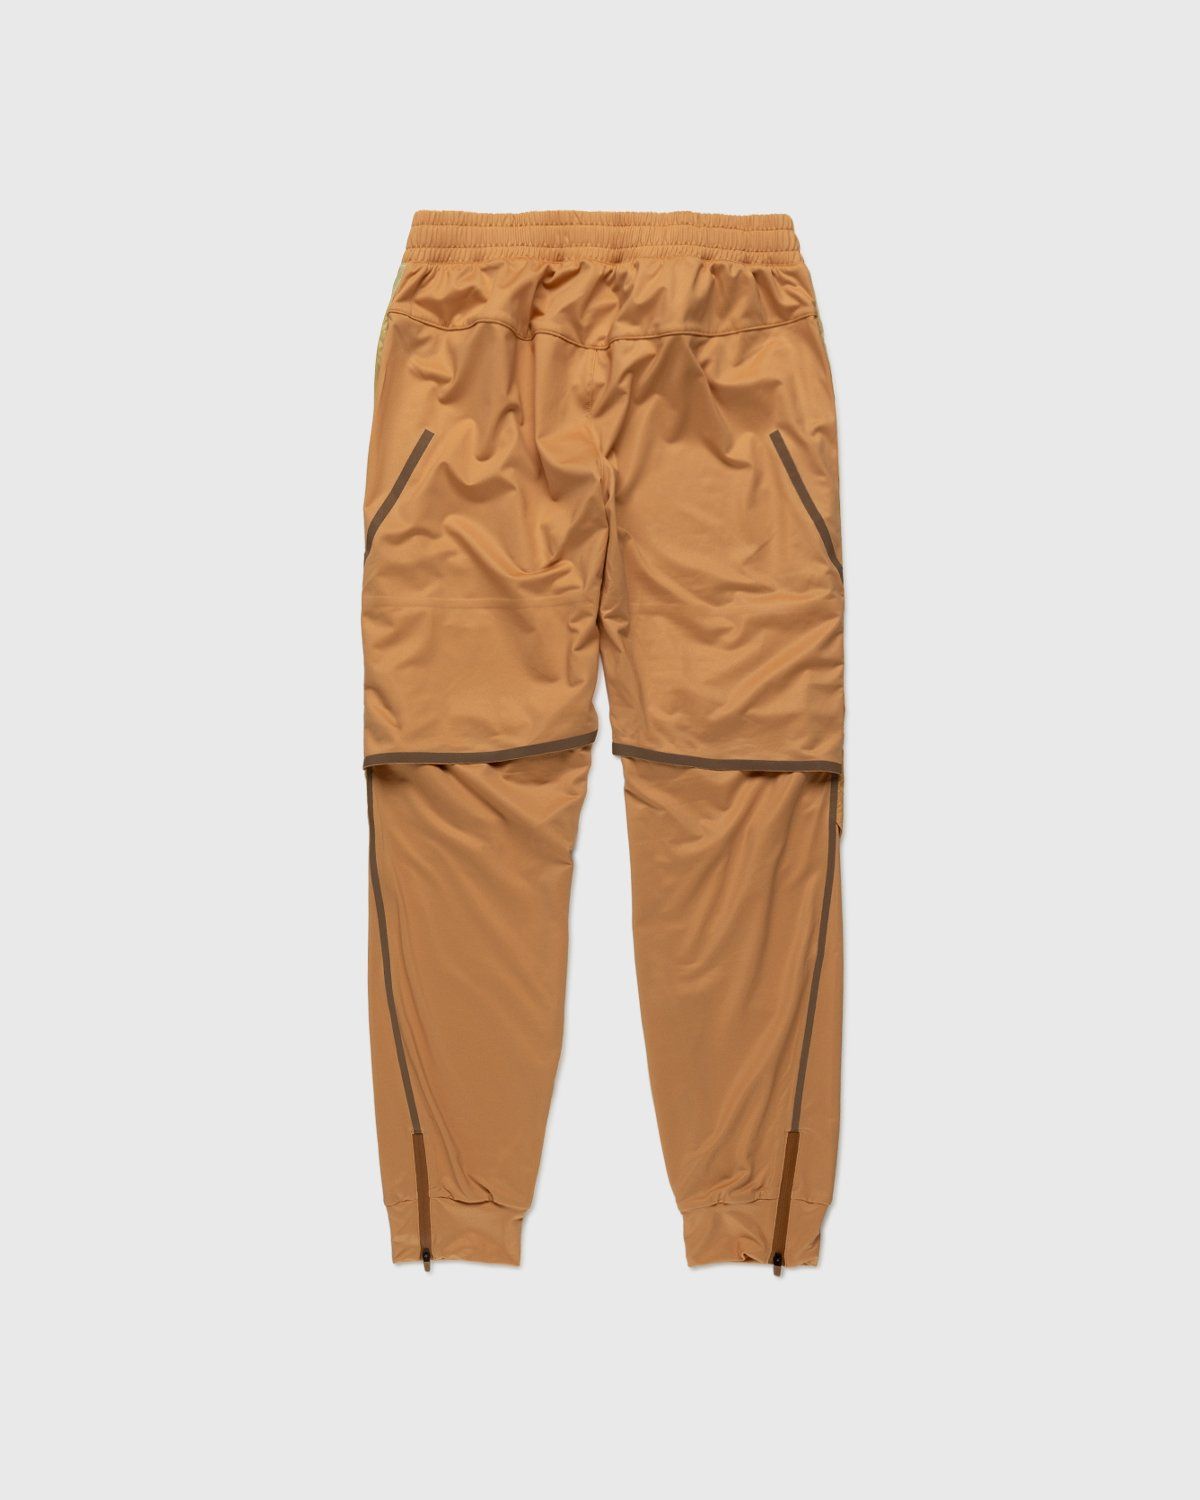 Loewe x On – Women's Technical Running Pants Gradient Orange - Pants - Orange - Image 2